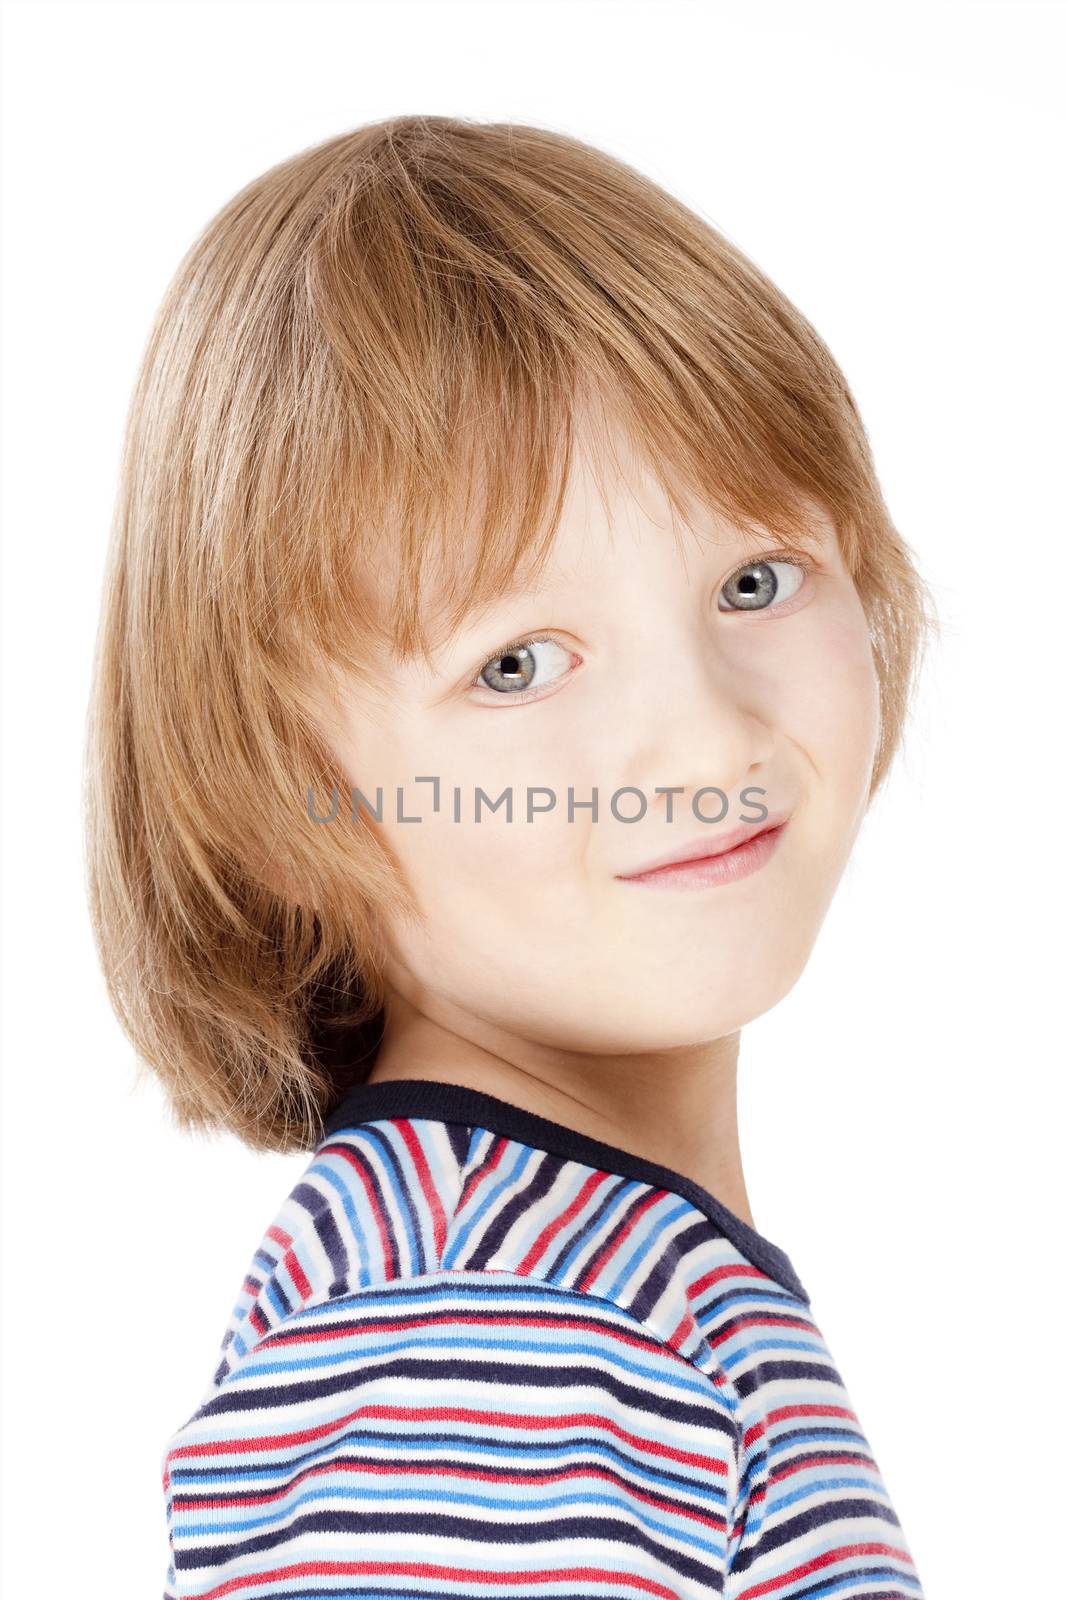 Portrait of a Boy by courtyardpix